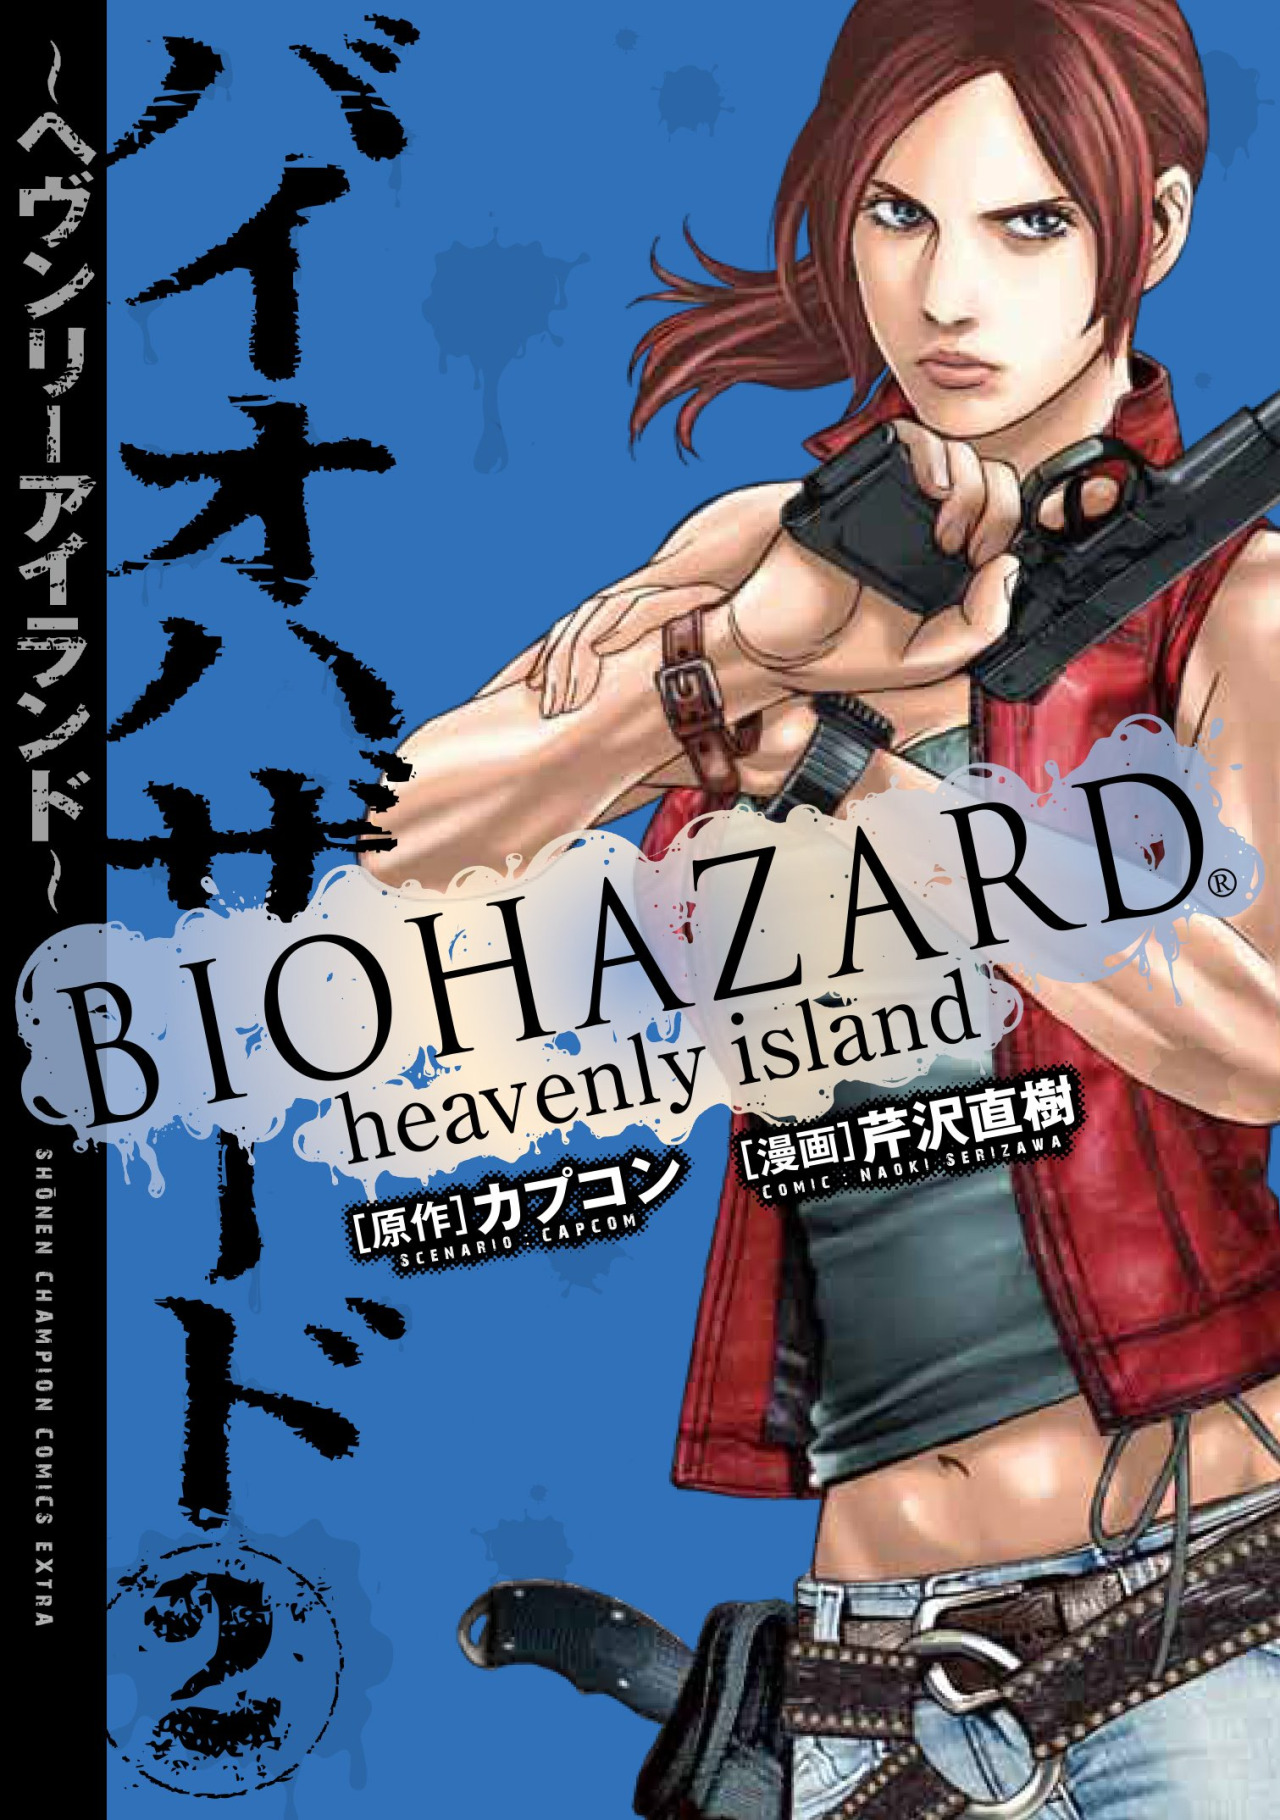 Planeta publicara el manga Resident Evil: Heavenly Island